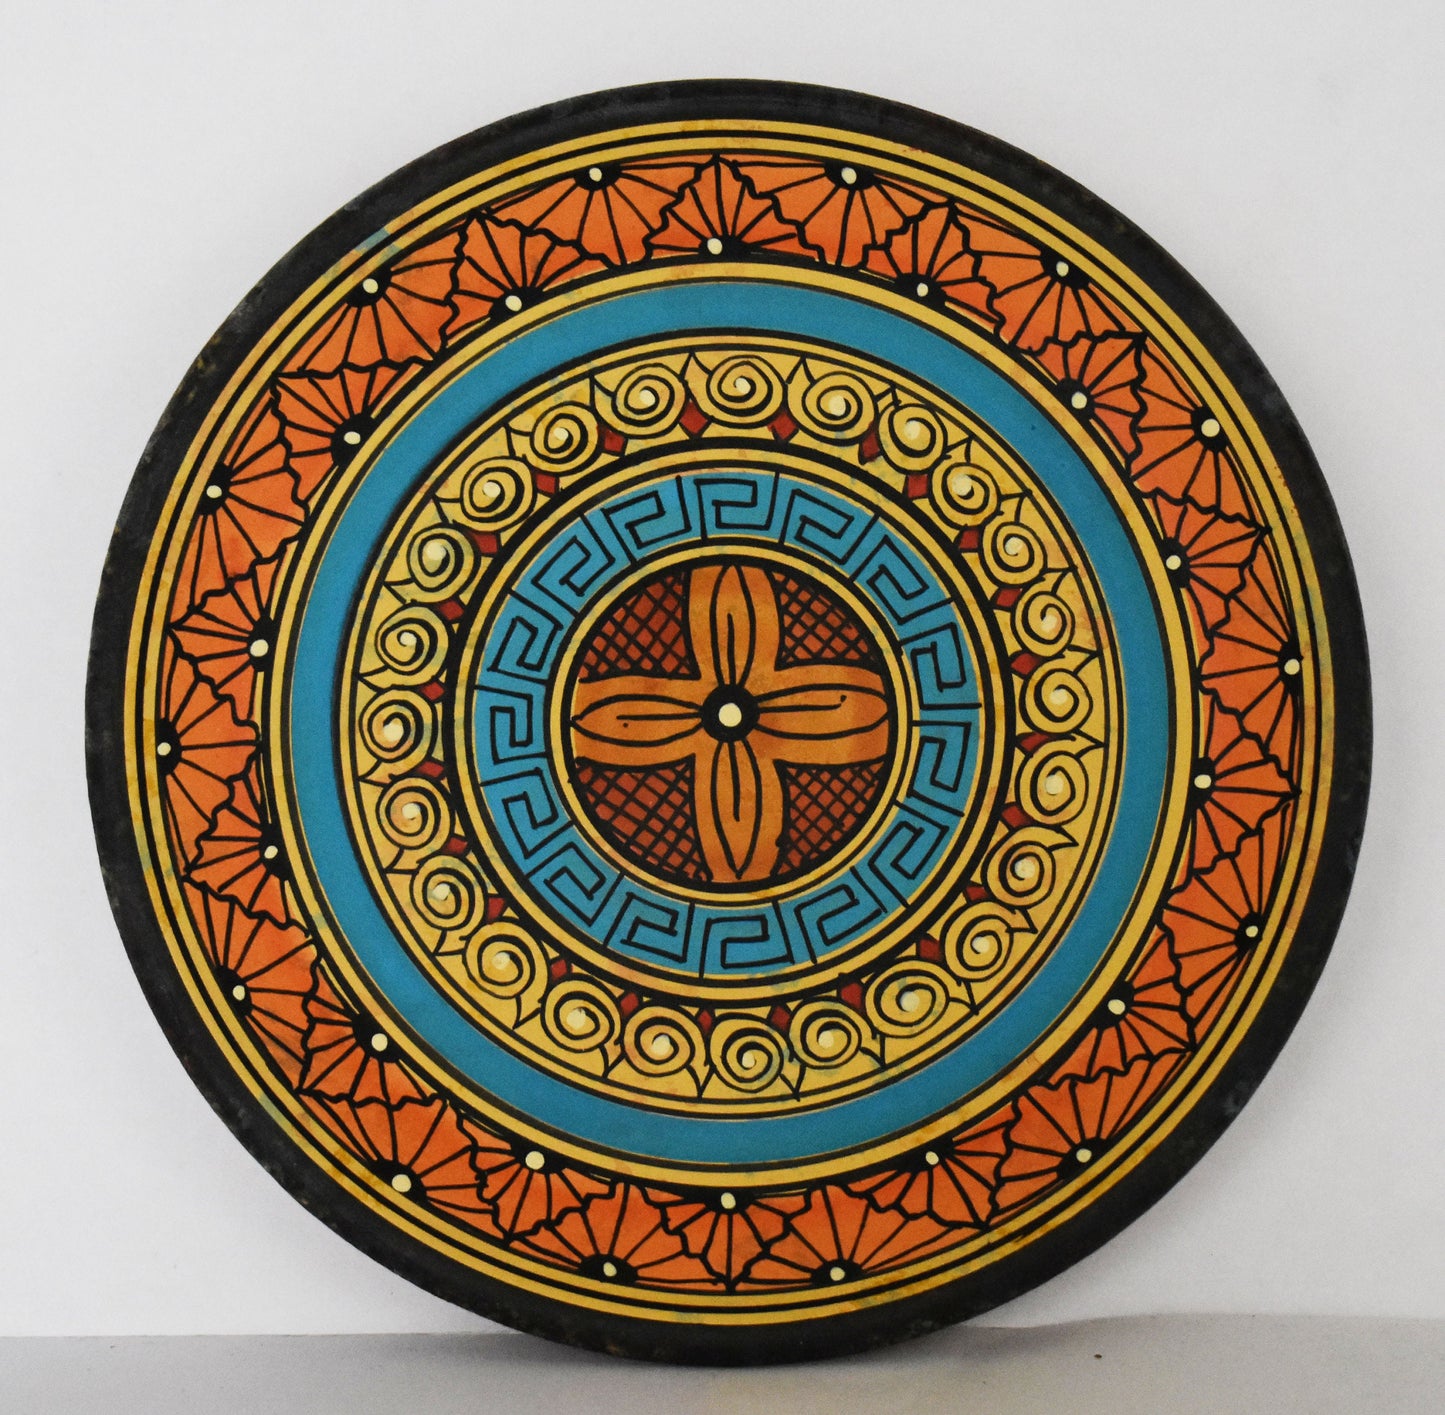 Small Ceramic plate - Meander Design - Athens, Attica - Geometric Period - 700 BC - Handmade